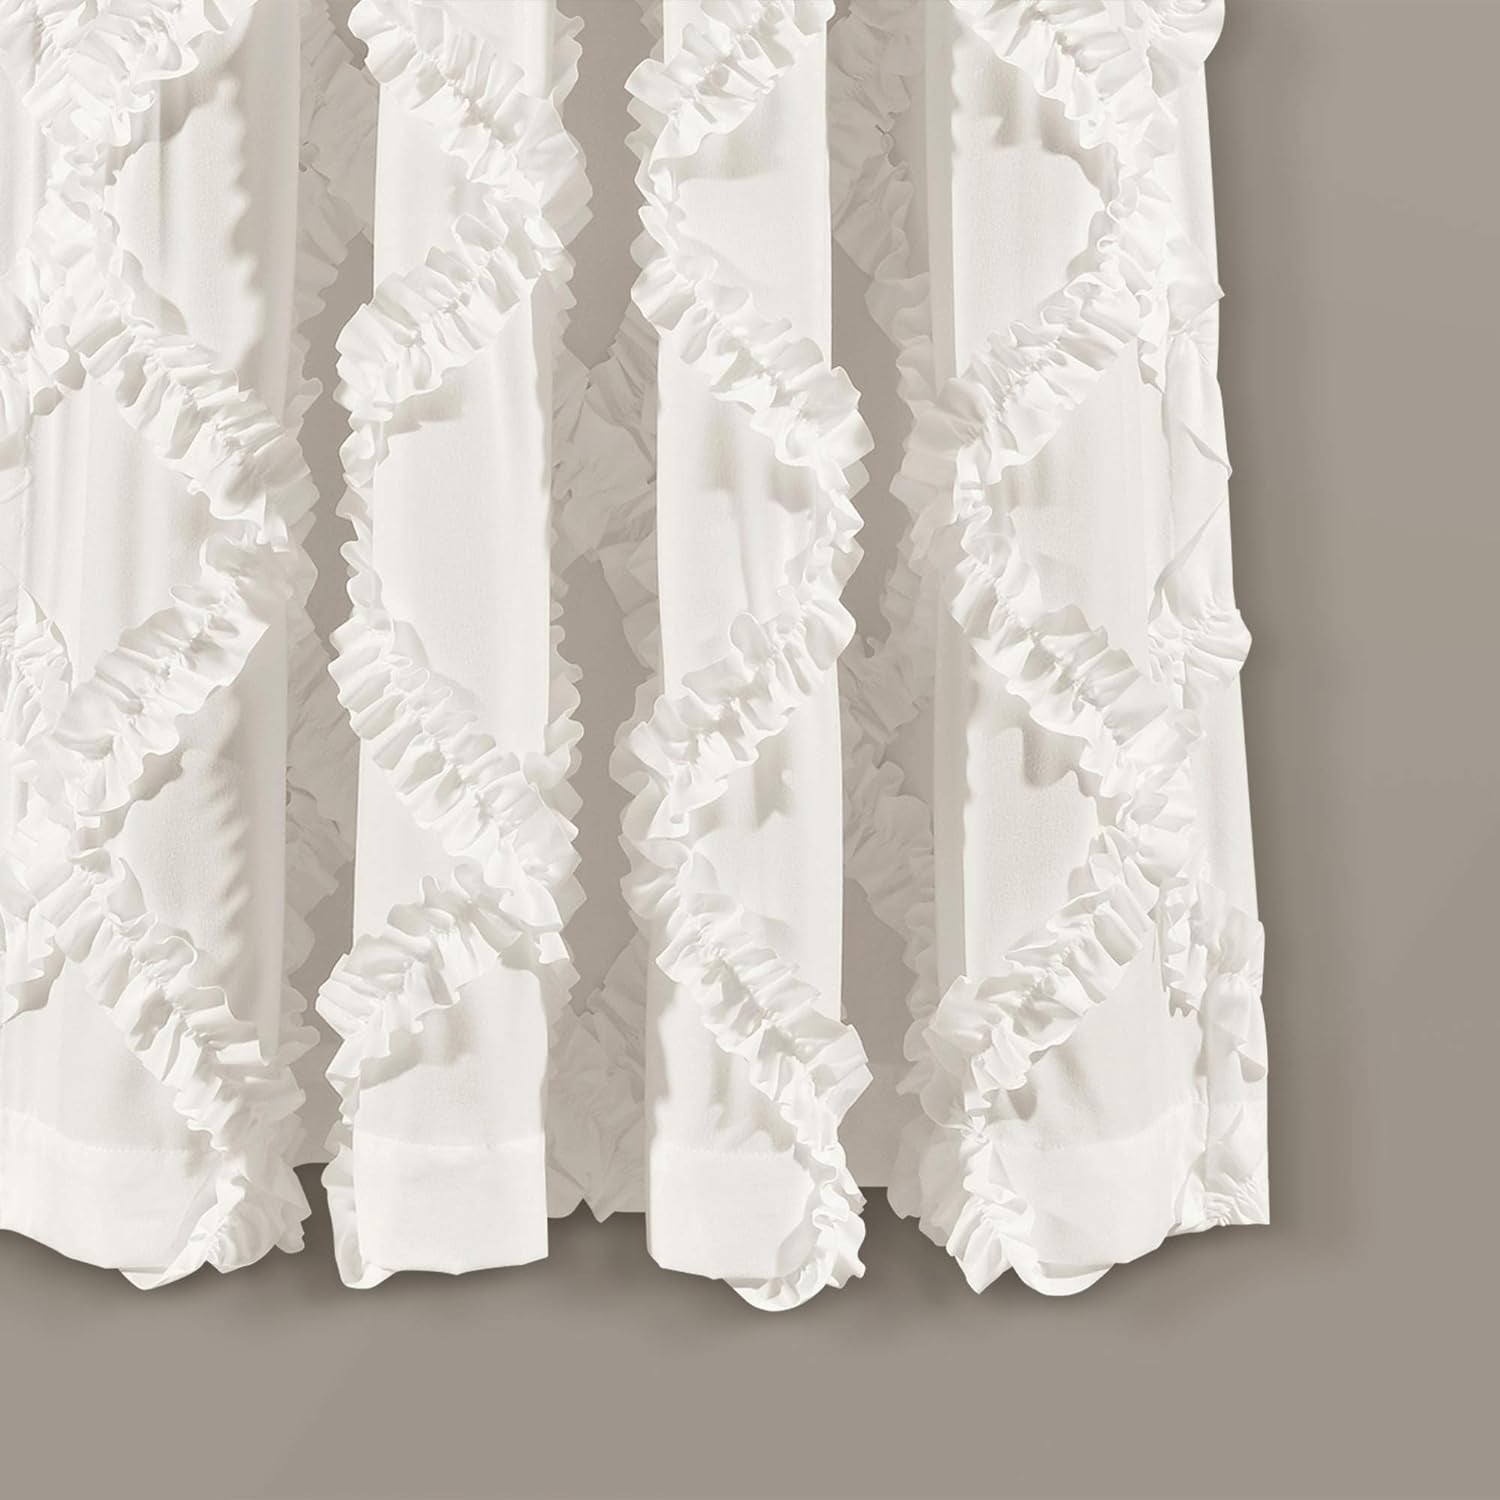 Ruffle Diamond Window Curtain Panel Pair, 63 in X 54 In, White